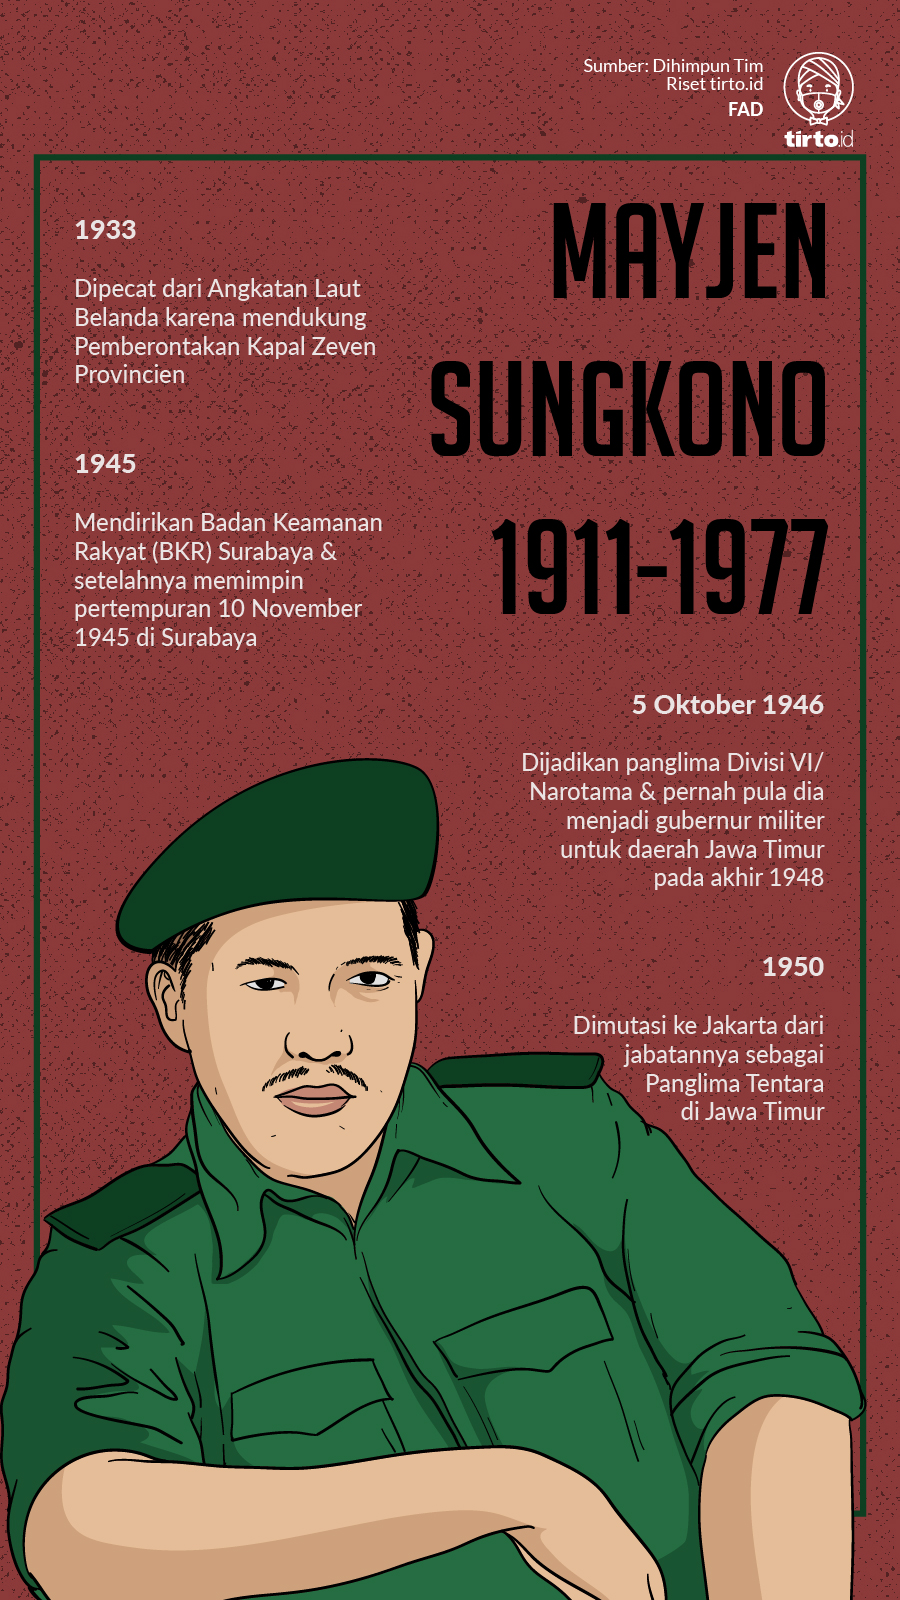 Infografik Mayjen Sungkono 1911-1977